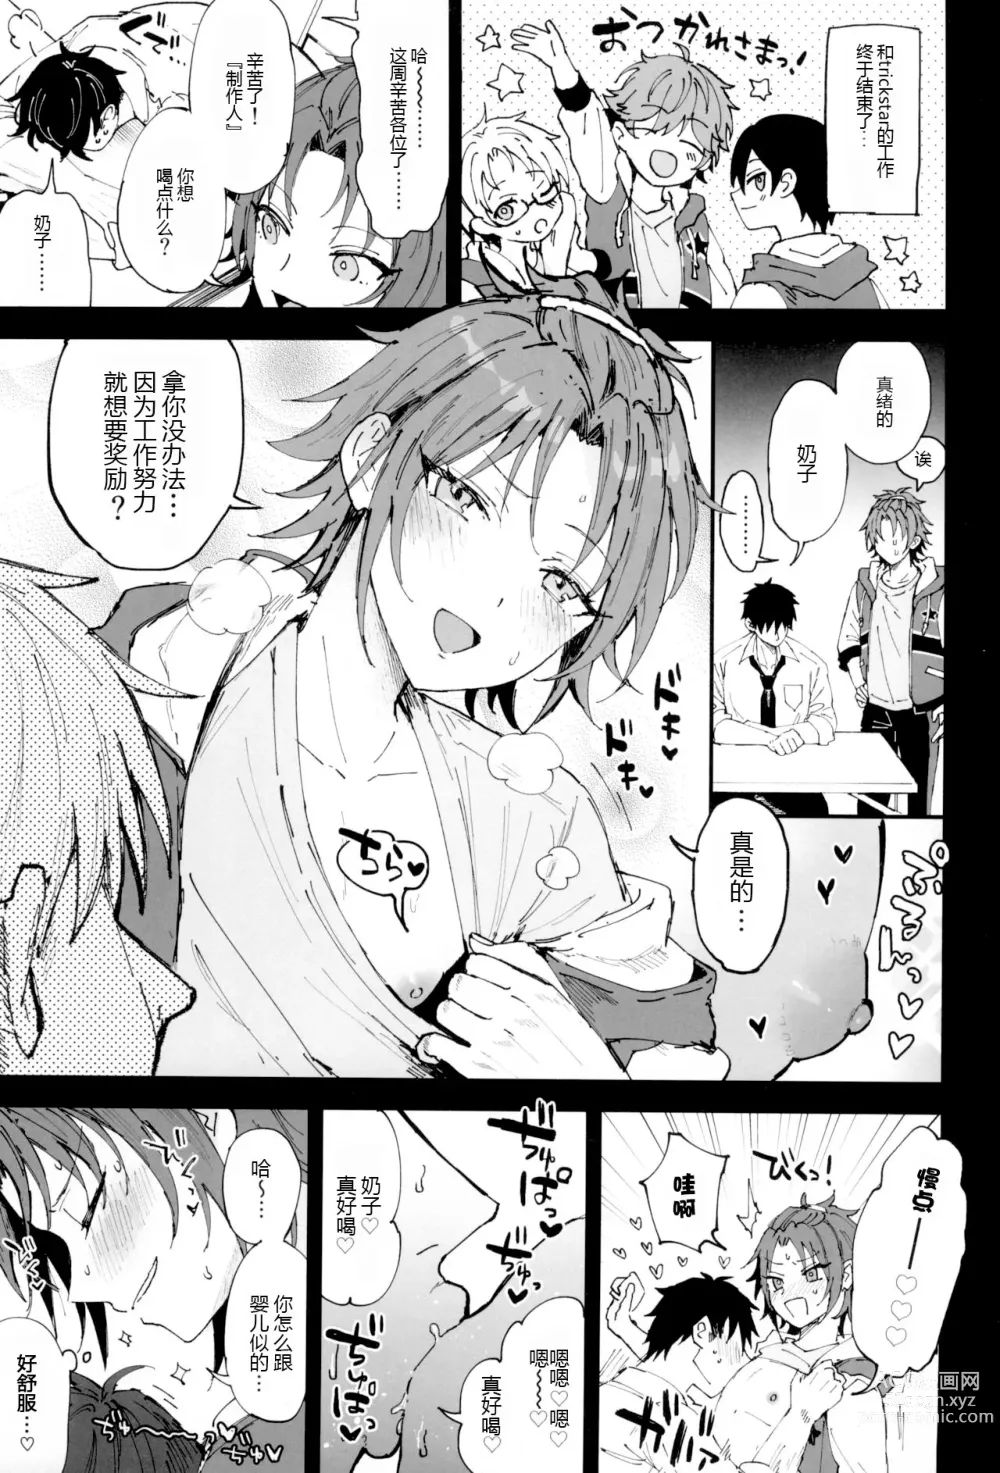 Page 13 of doujinshi Ore to kanojo to 1 week